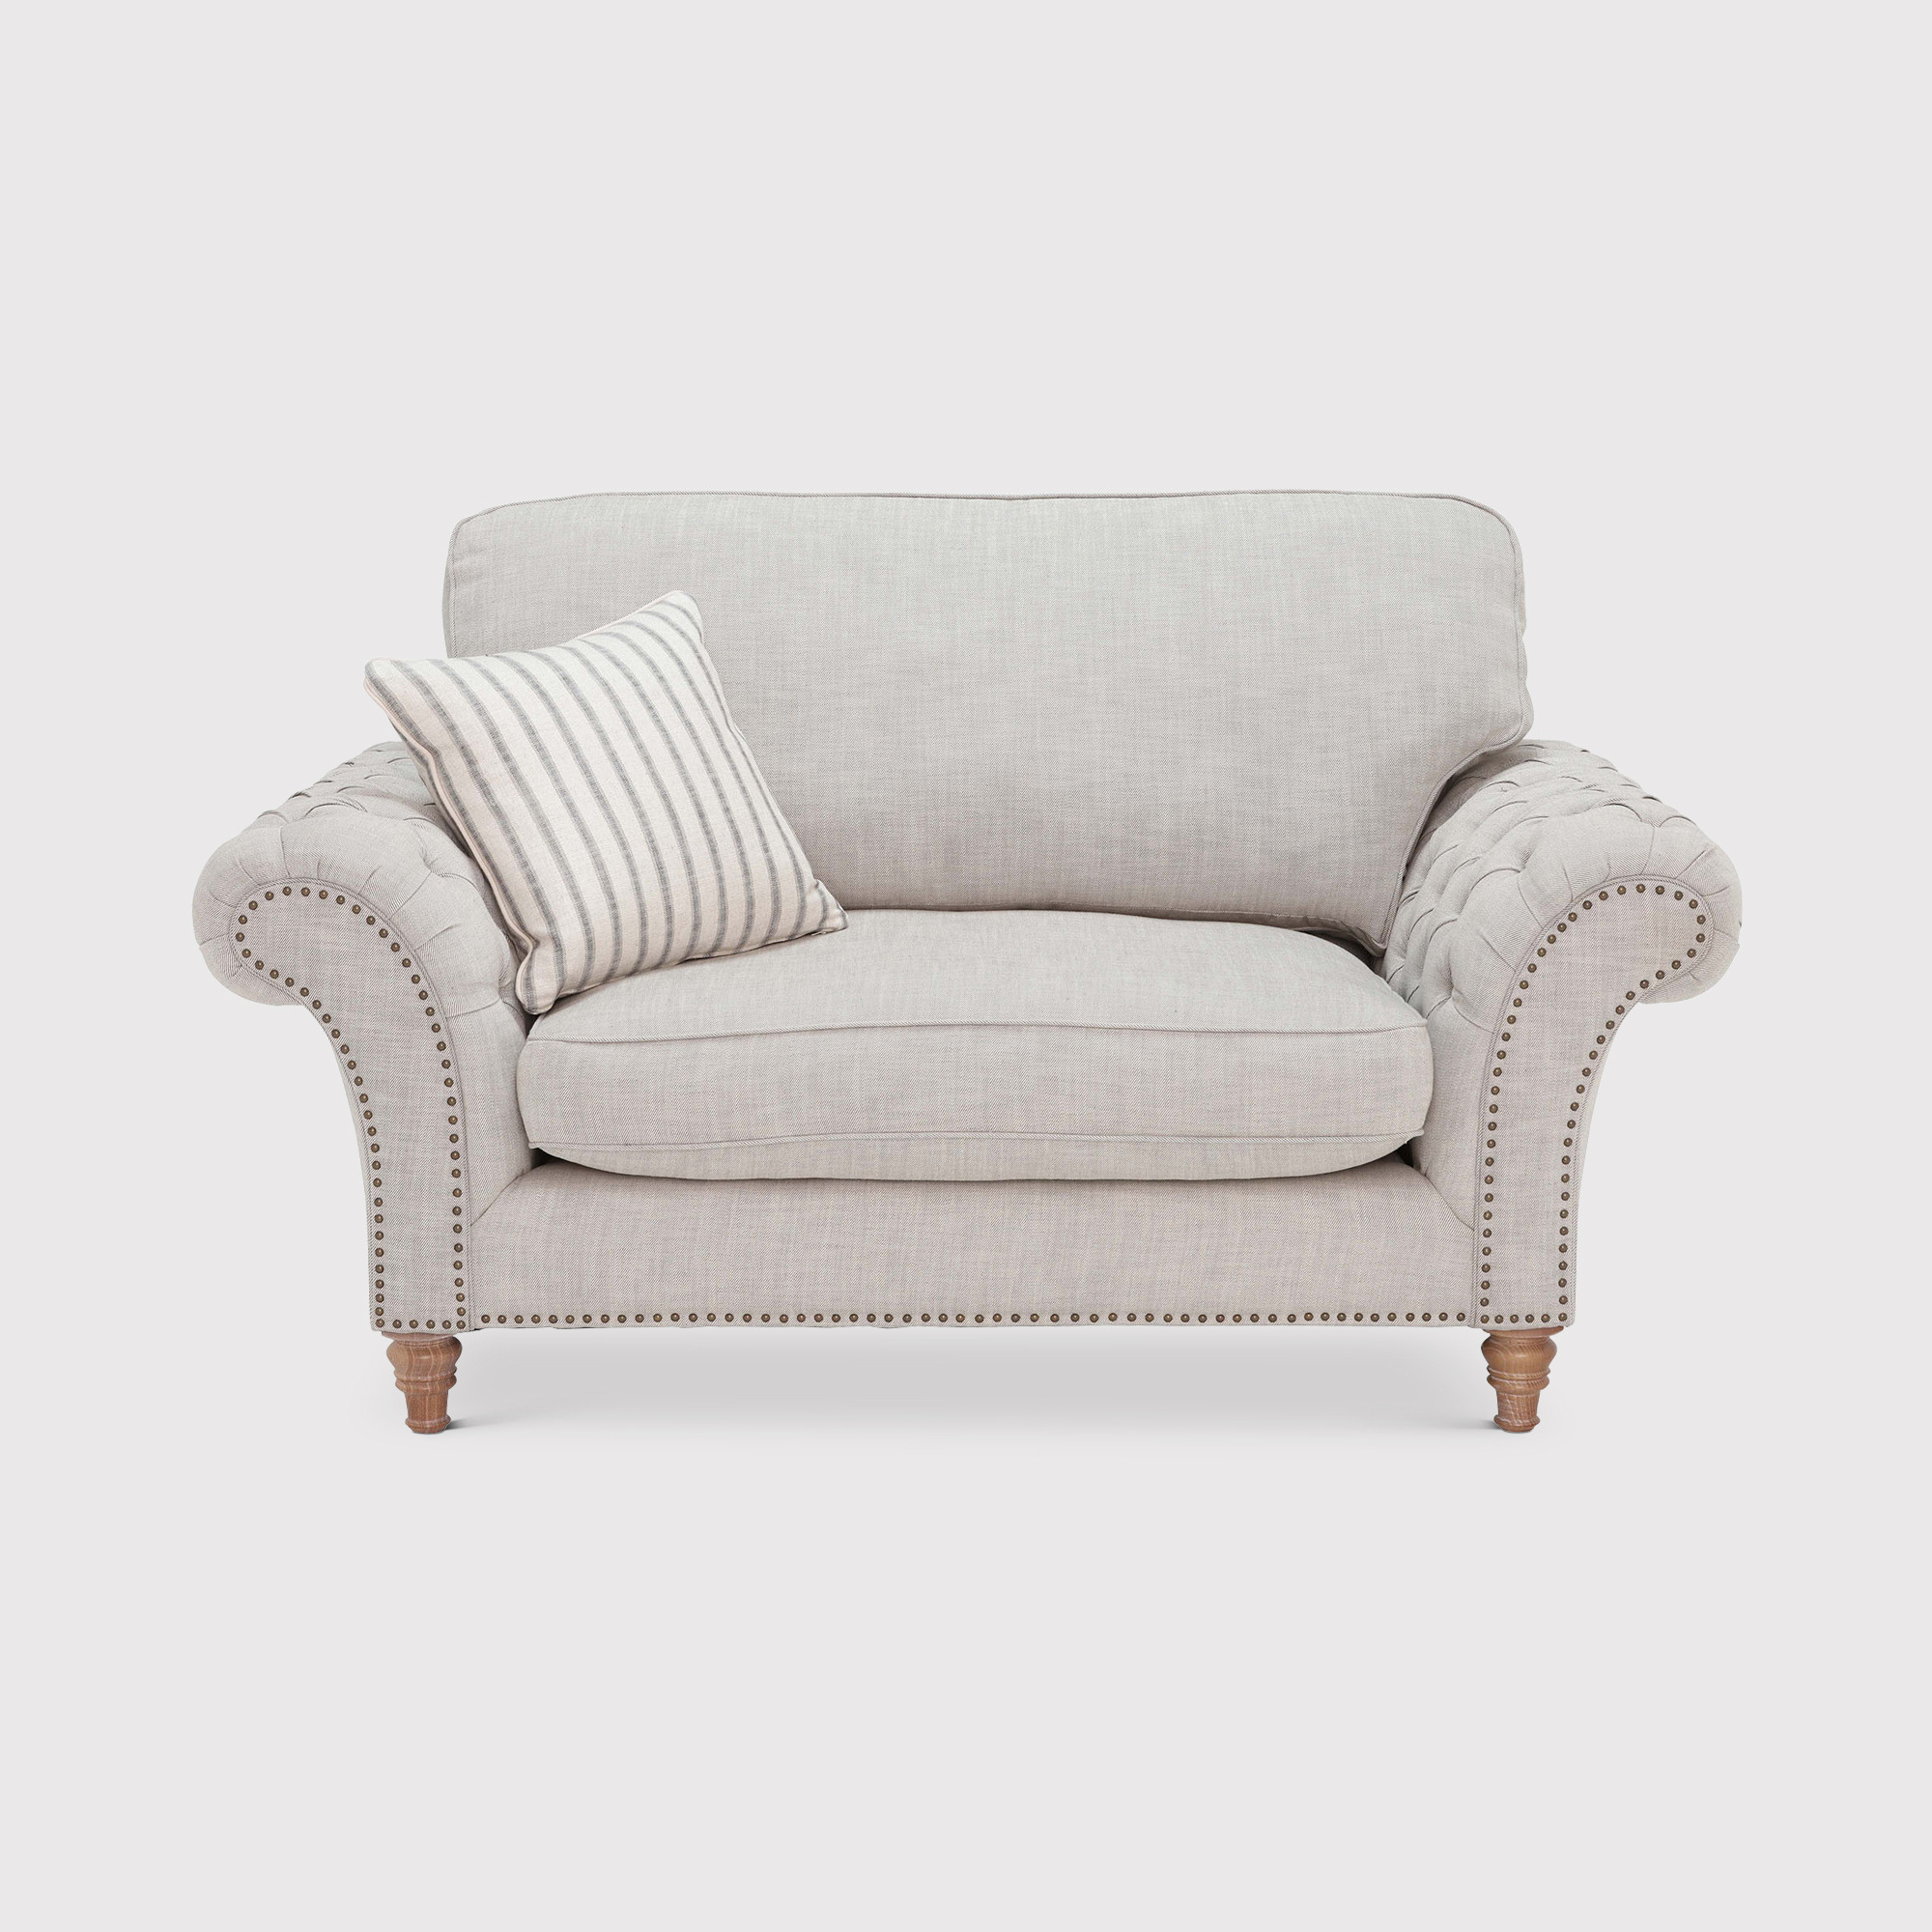 Craven Loveseat Sofa, Neutral Fabric - Barker & Stonehouse - image 1